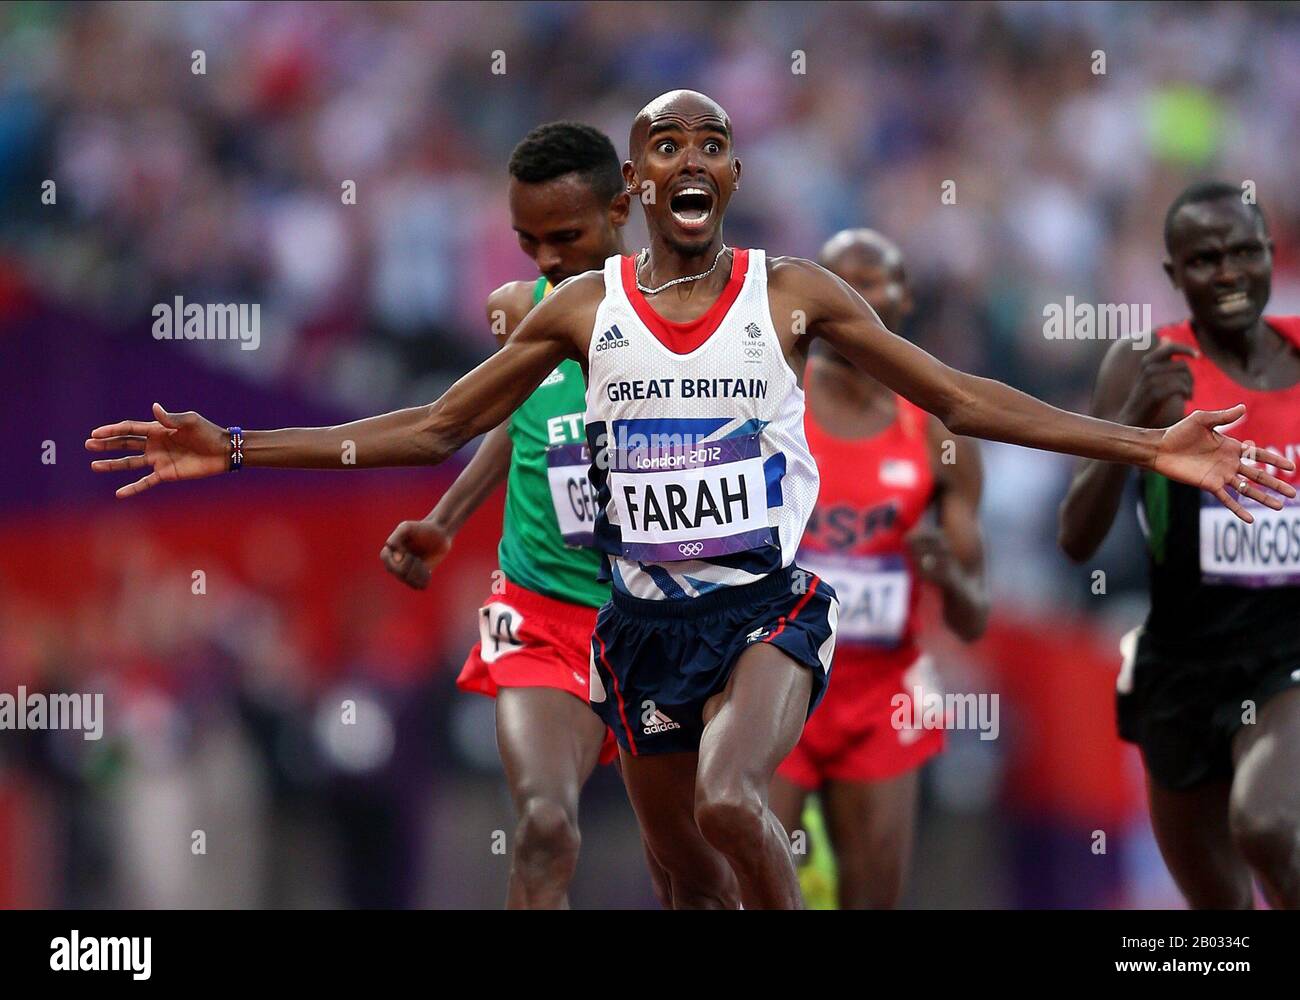 MO FARAH WINS OLYMPIC 5000M FINAL 2012 Stock Photo